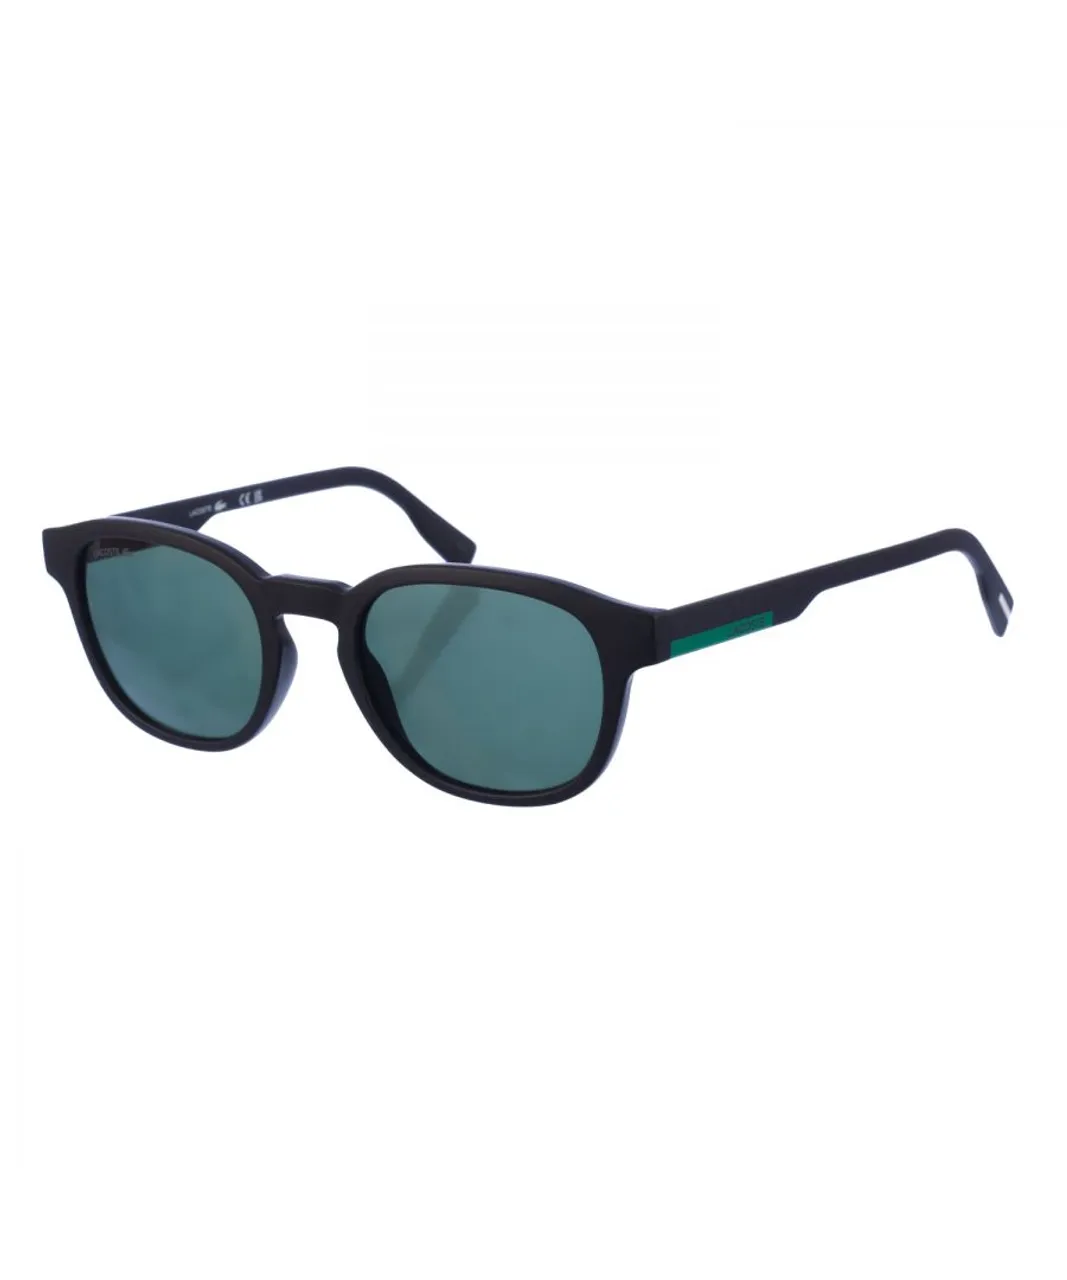 Lacoste Womens Oval shaped acetate sunglasses L968S women - Black - One